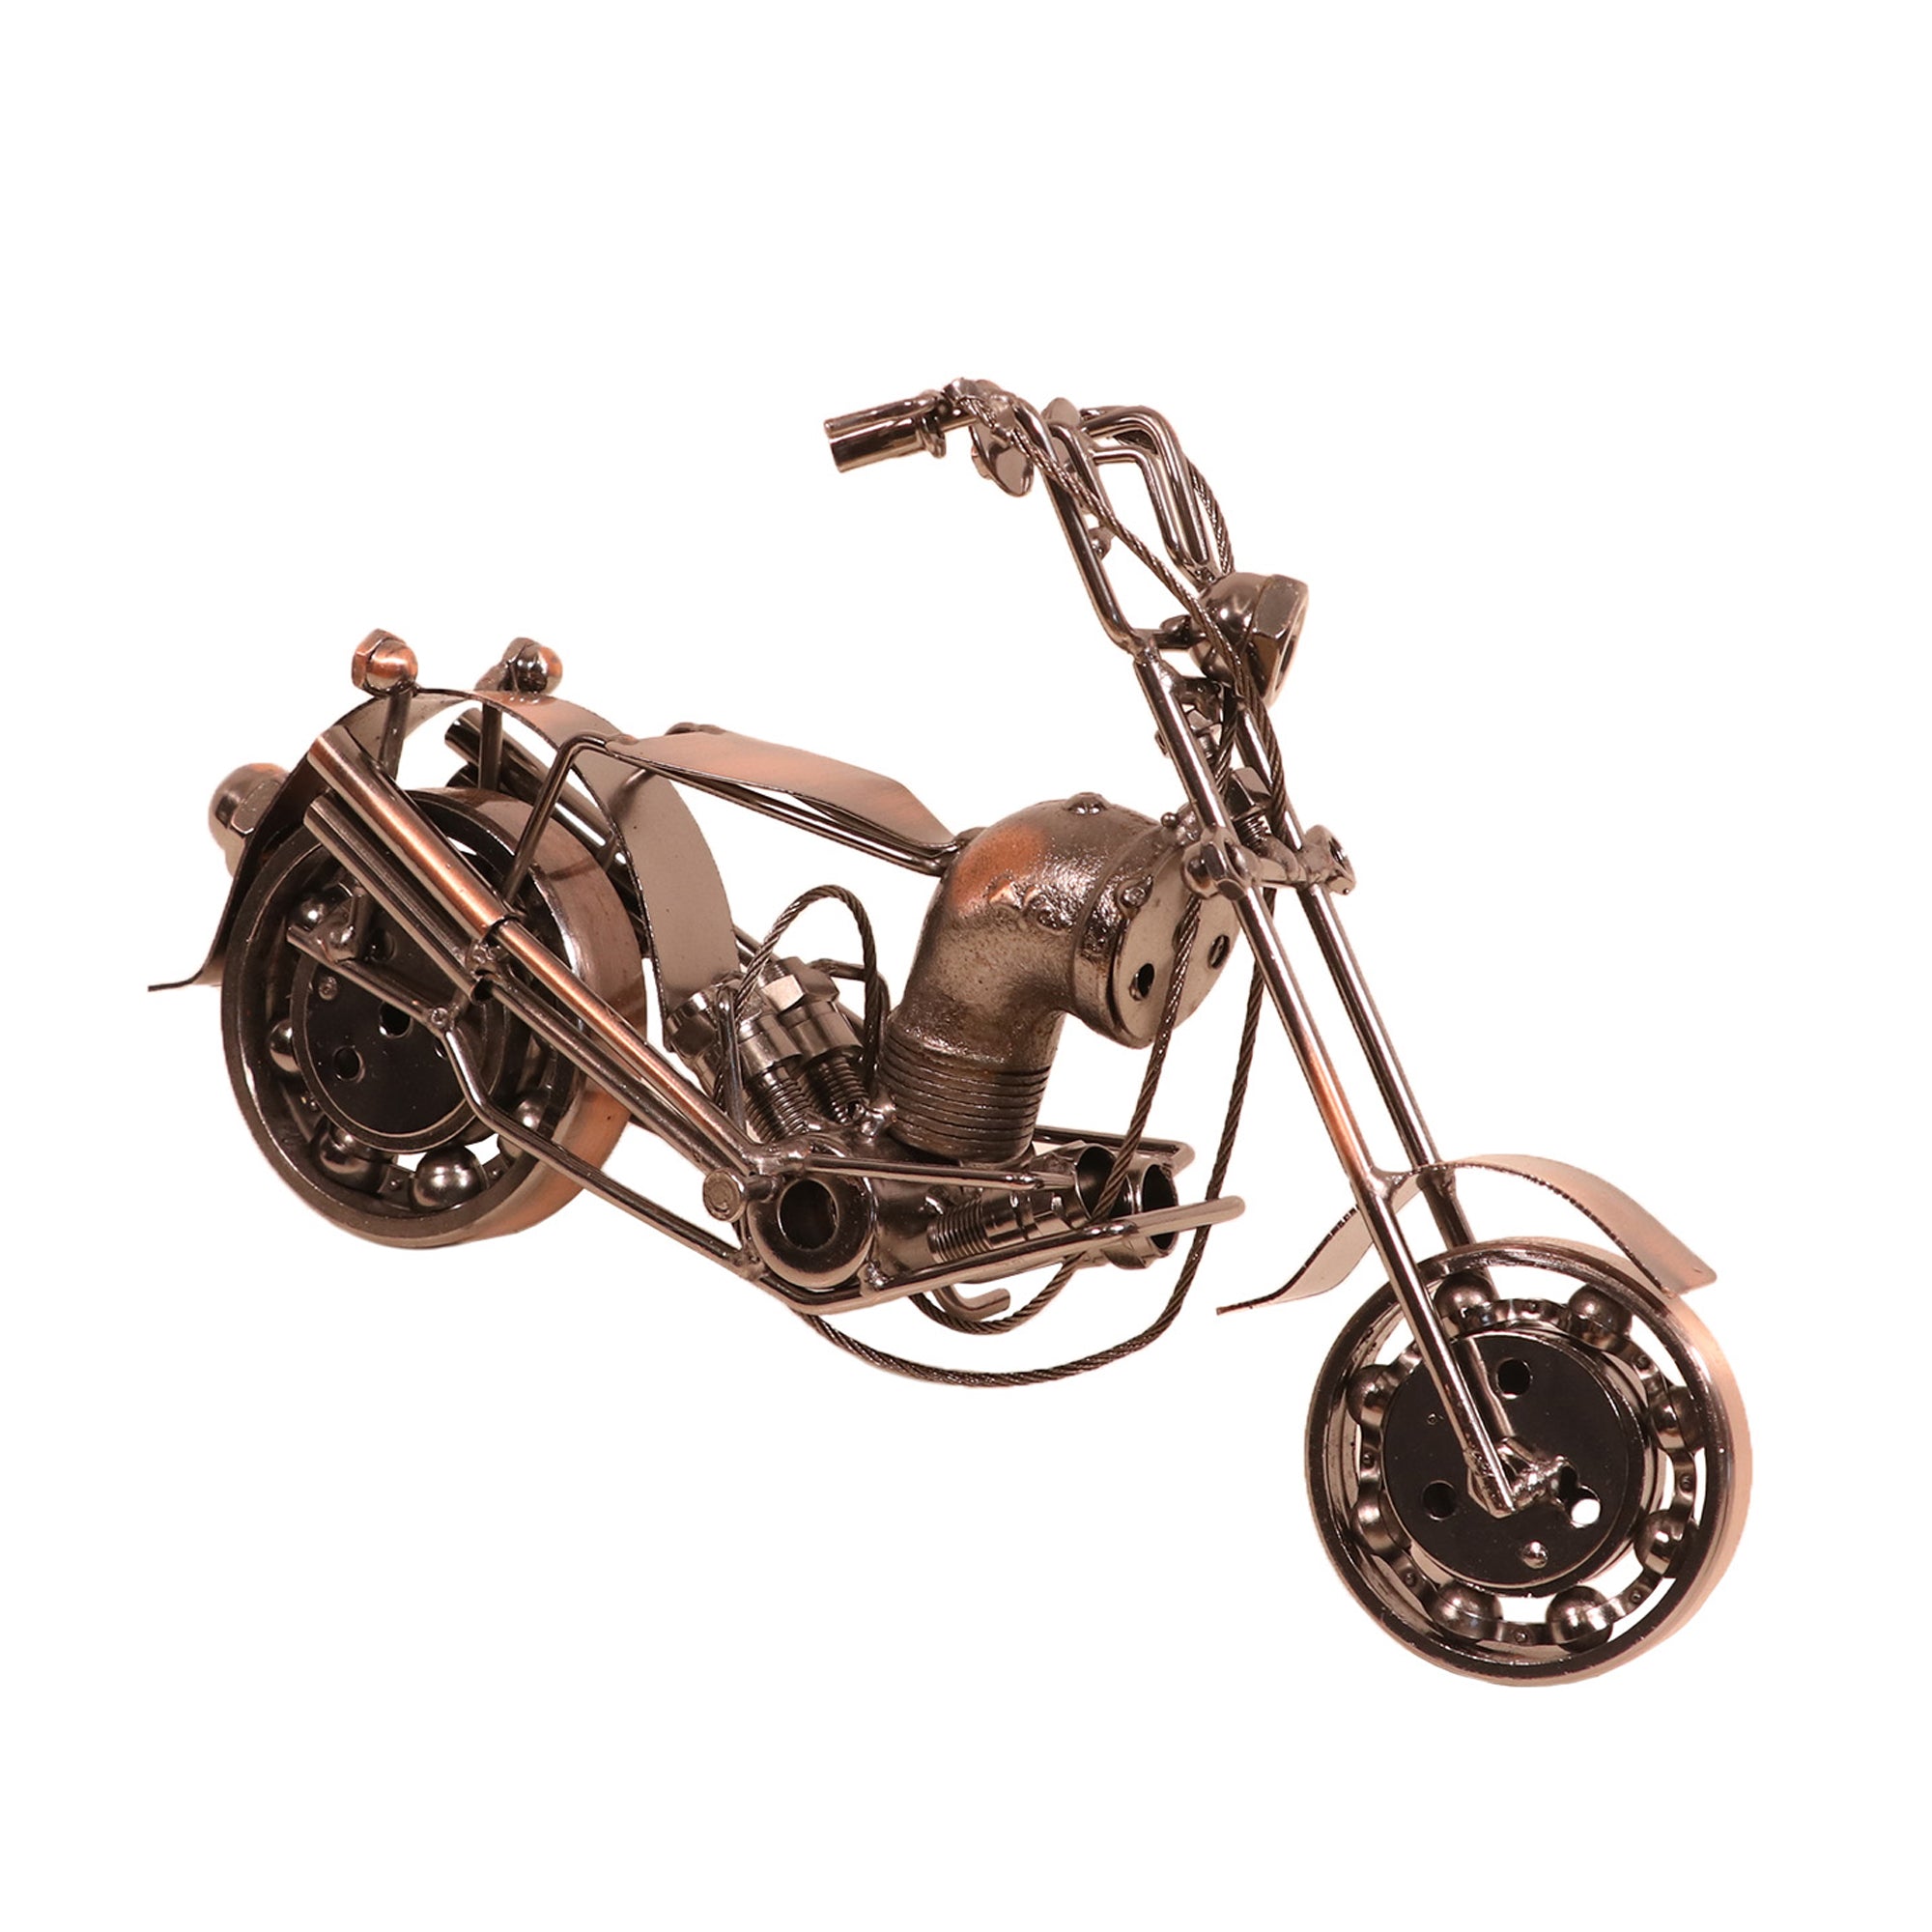 Metallic decorative bike Miniature Vehicle figurine